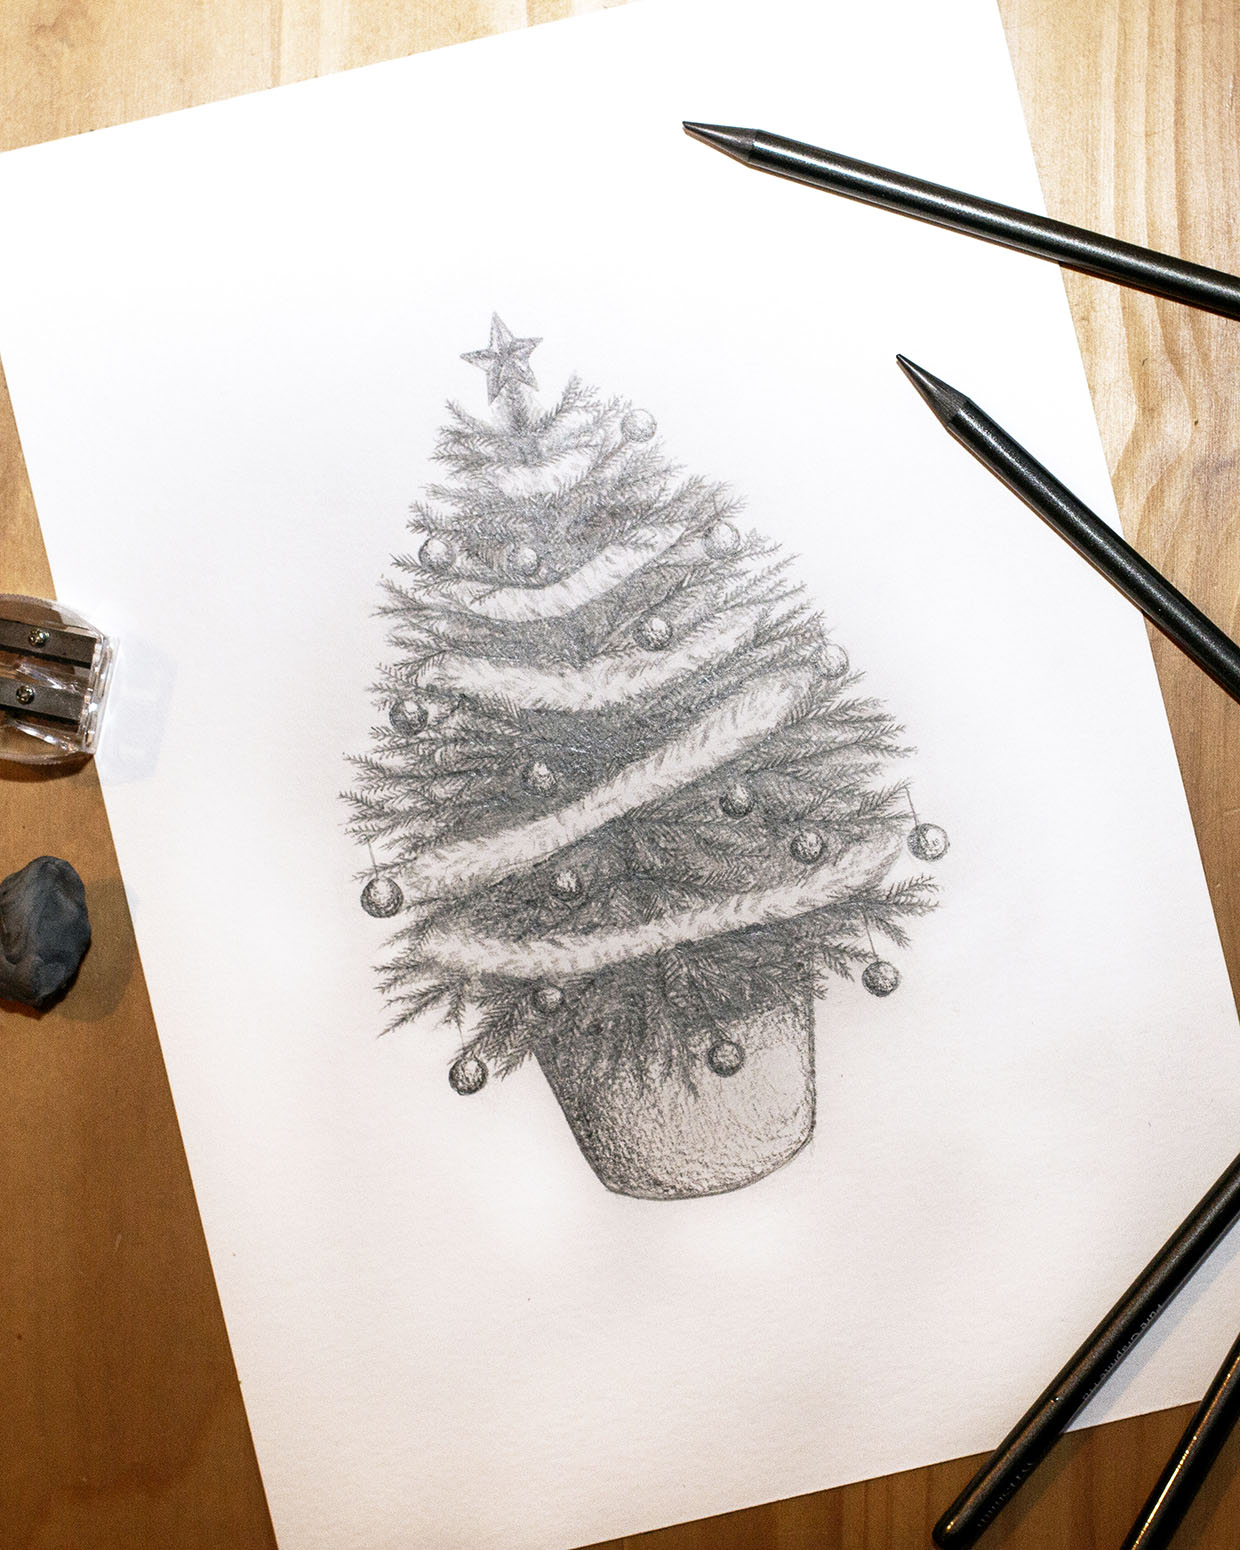 40 Christmas Drawing Ideas: Creative Inspiration for Season